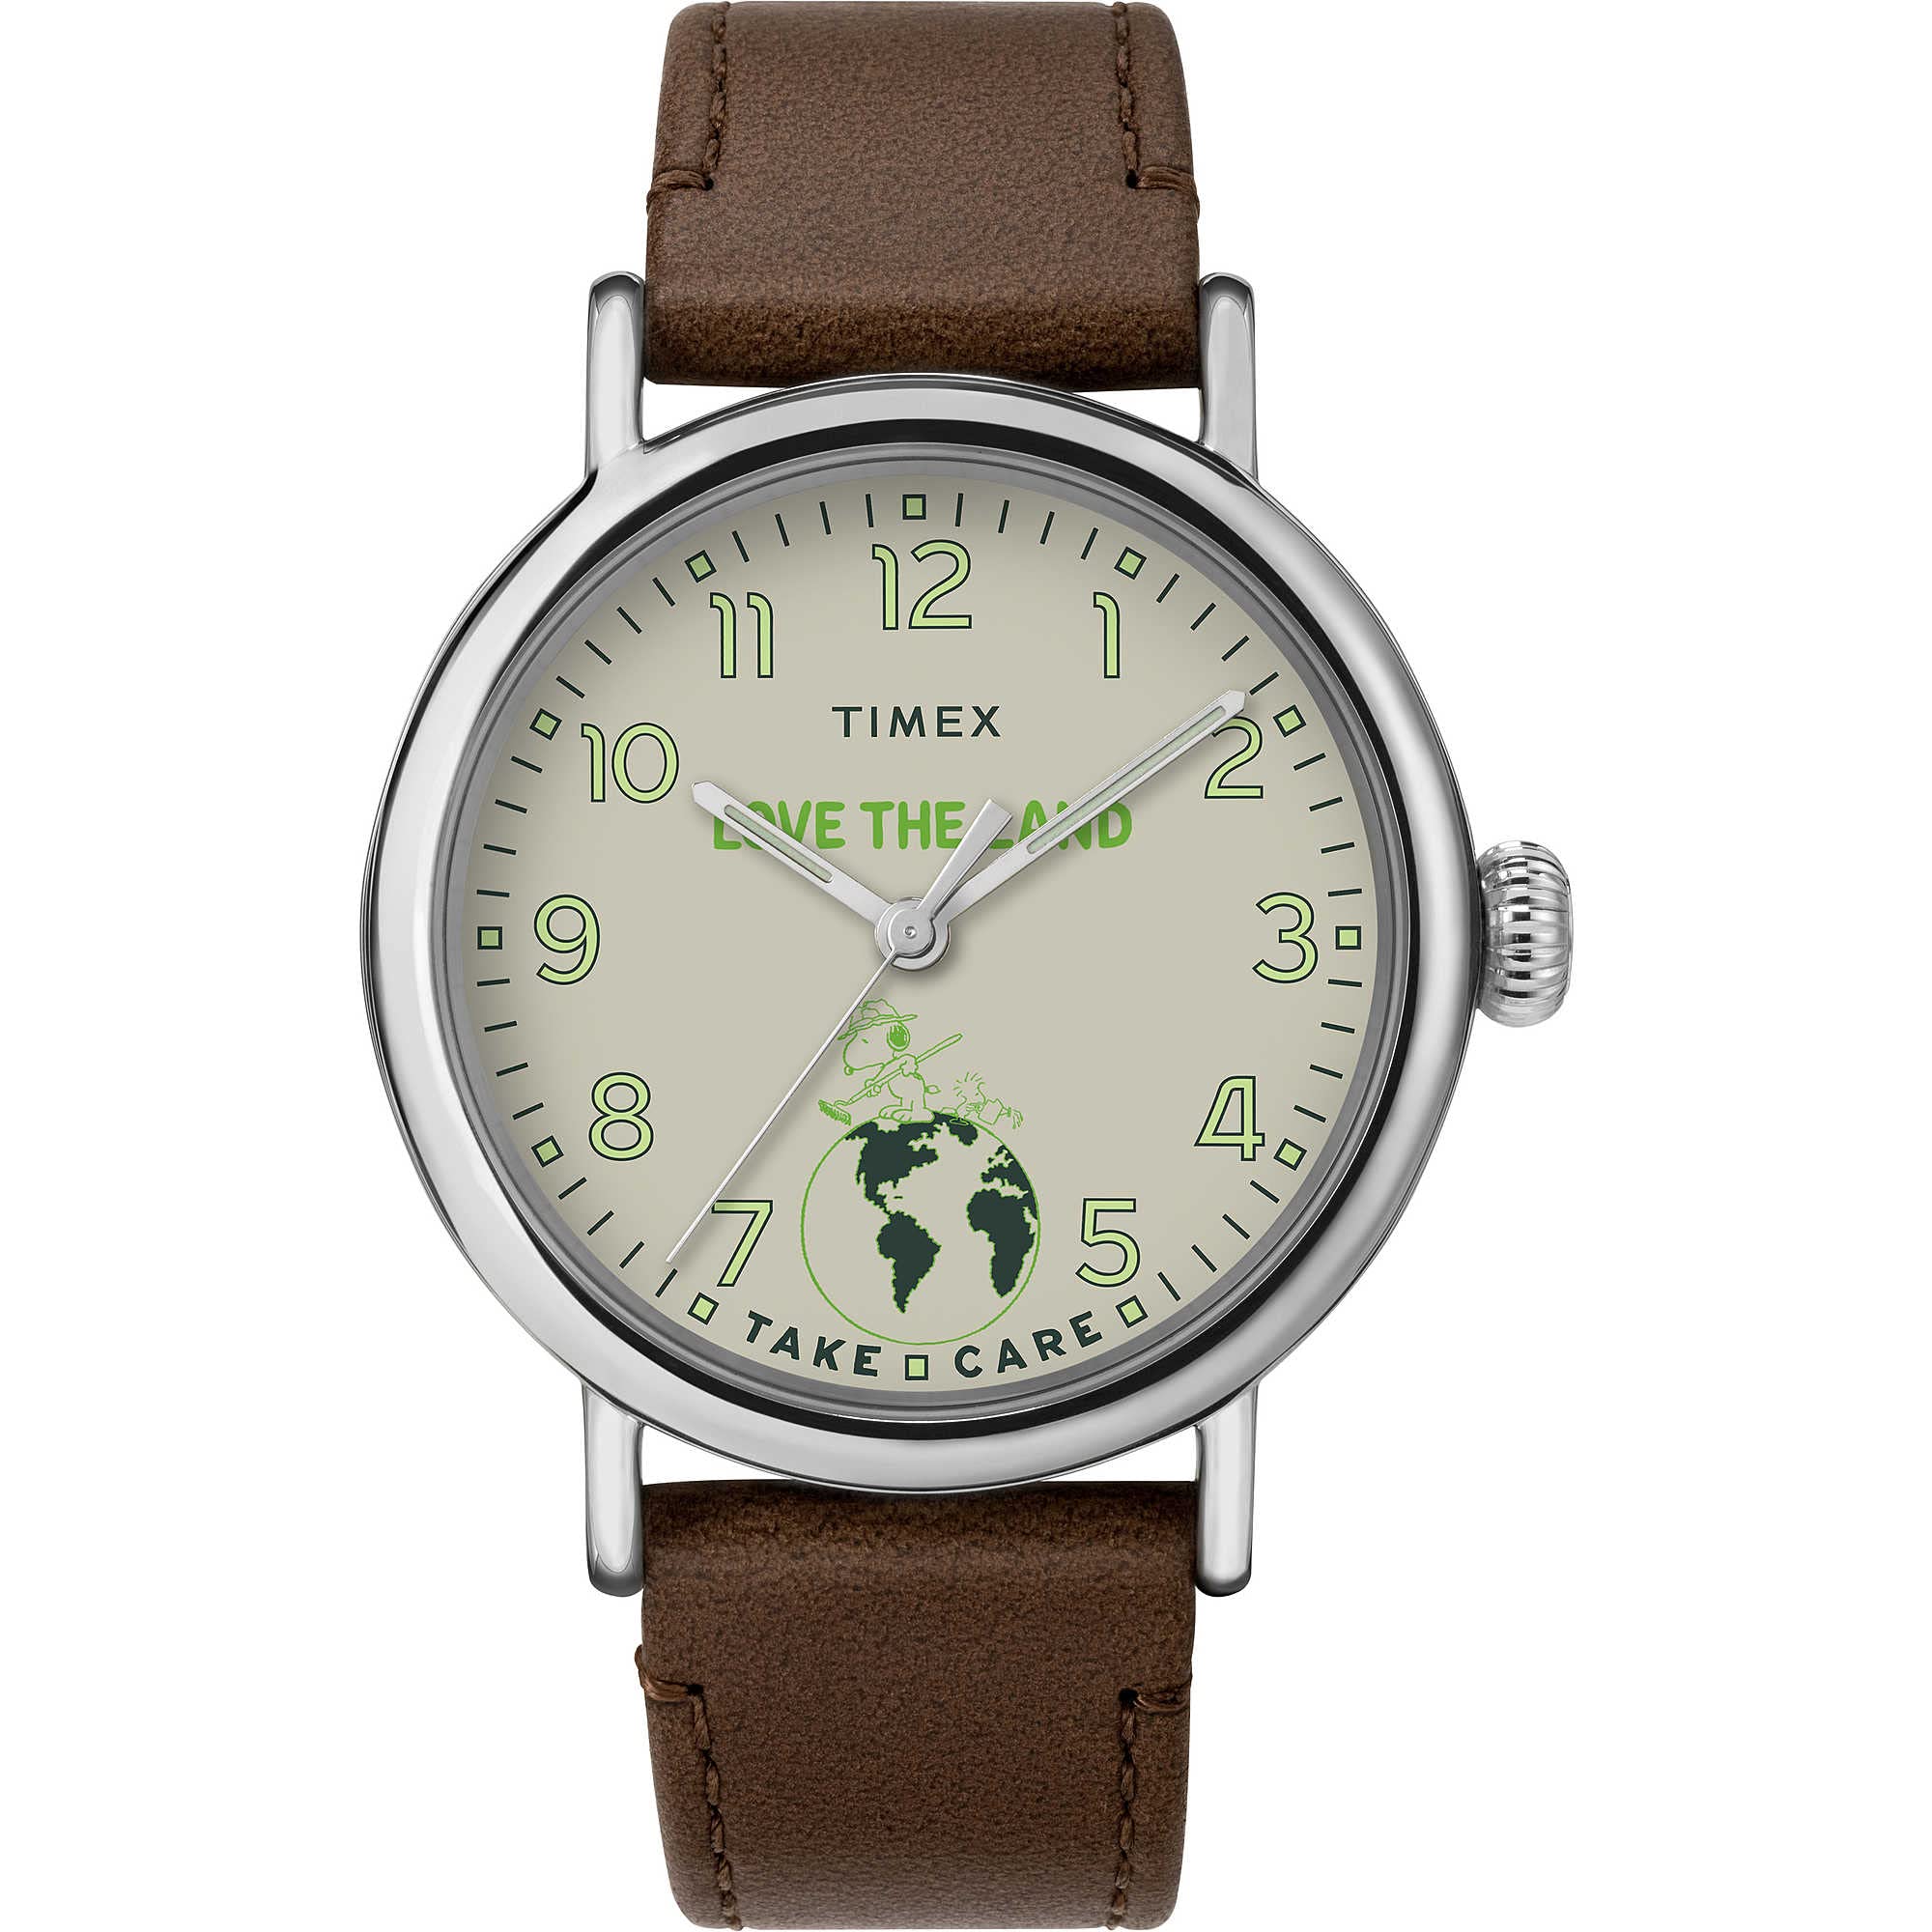 Timex TW2V32700 Men's Analogue Quartz Watch with Leather Strap, Black, Strap